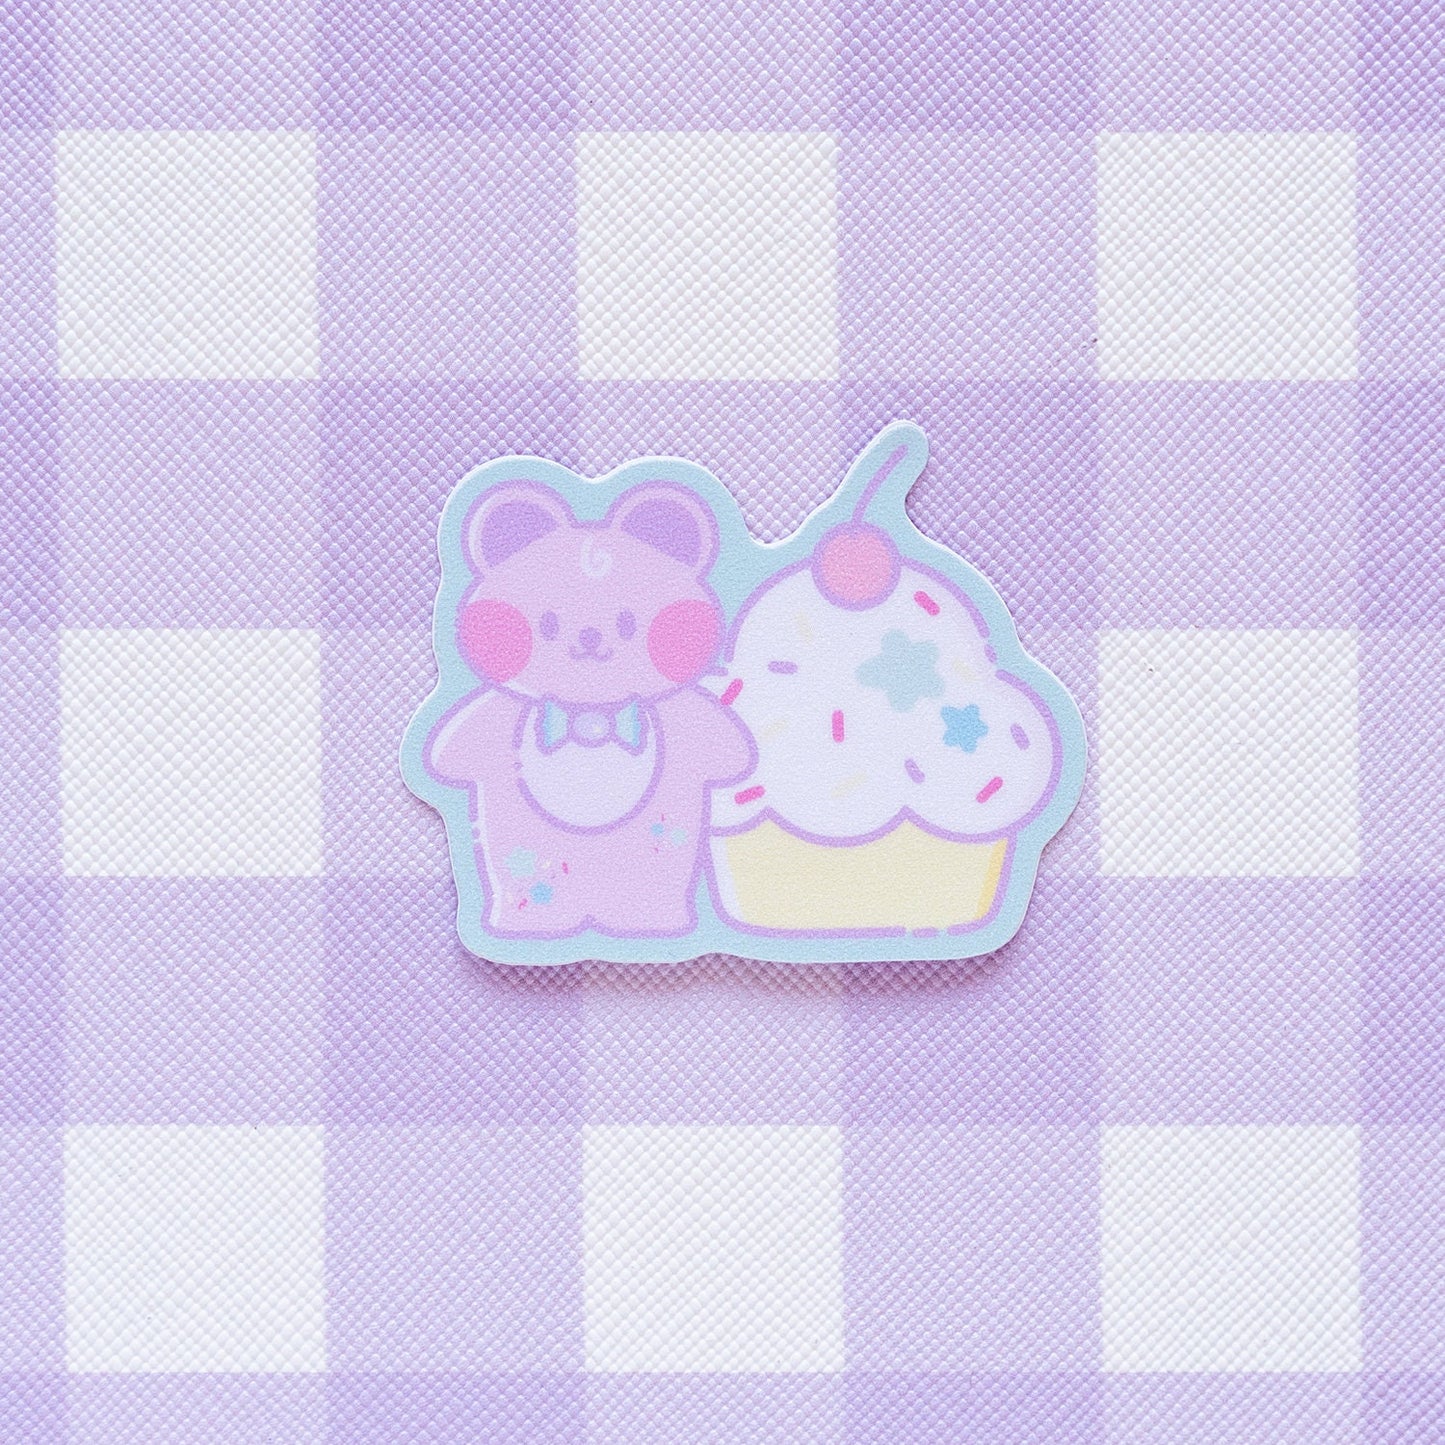 Darekuma Retro Pop Cupcake Frosted Finish Die-Cut Sticker